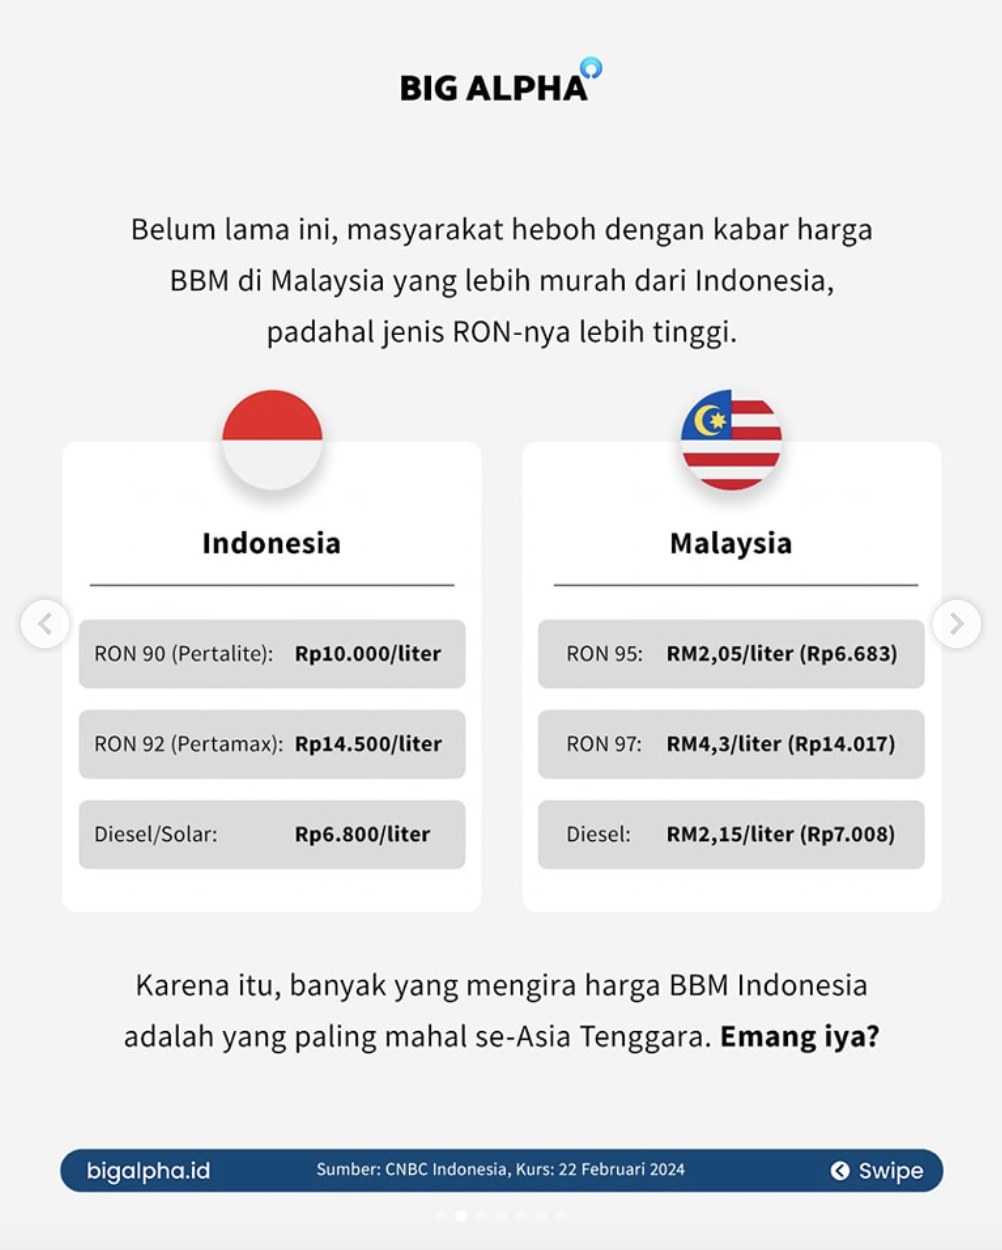 Big alpha fuel price malaysia vs indonesia